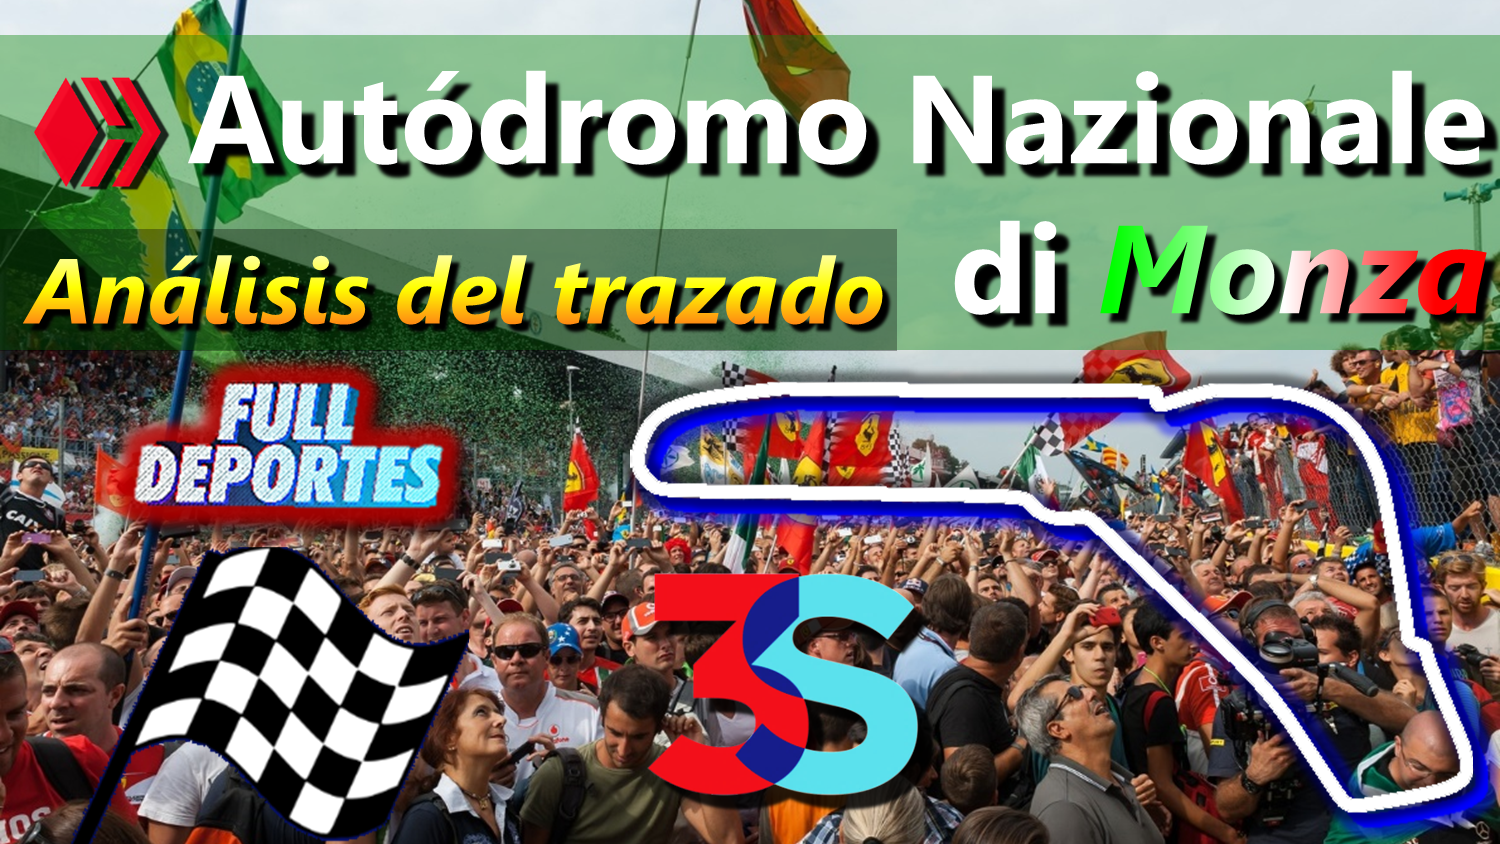 Análisis del Autódromo Nazionale di Monza Full Deportes F1 Fórmula 1 acontmotor Hive PeakD 3Speak Italy Italia Milano Ascari Parabolica Curva Grande Lesmo La Roggia FullDeportes.png